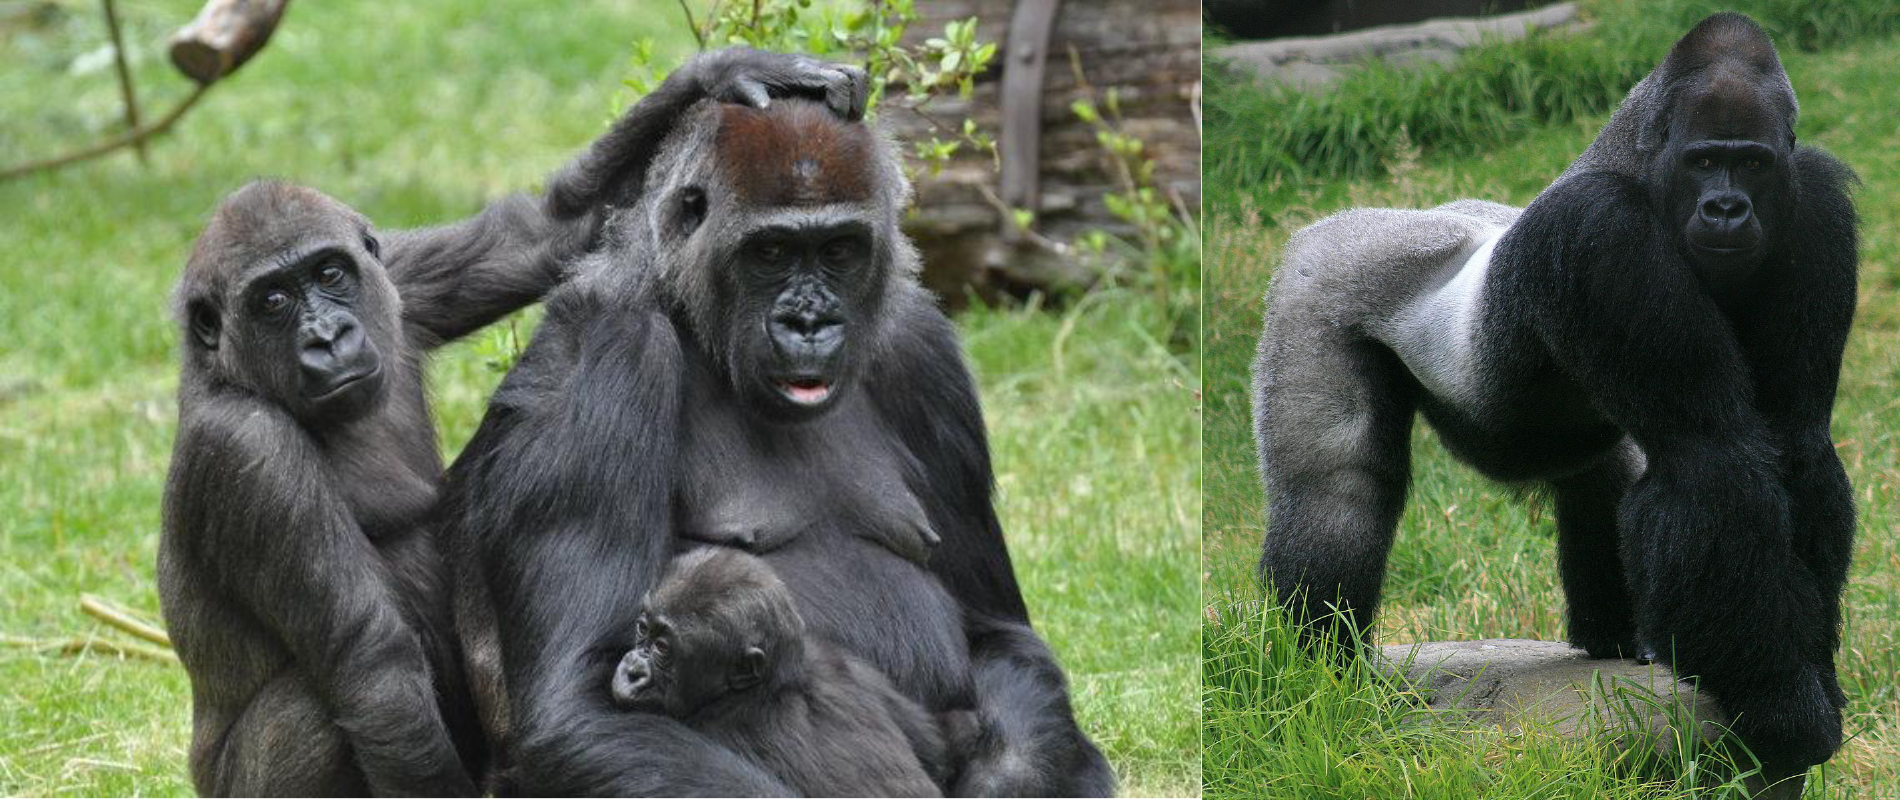 a. Female gorilla with offspring. b. Male gorilla.